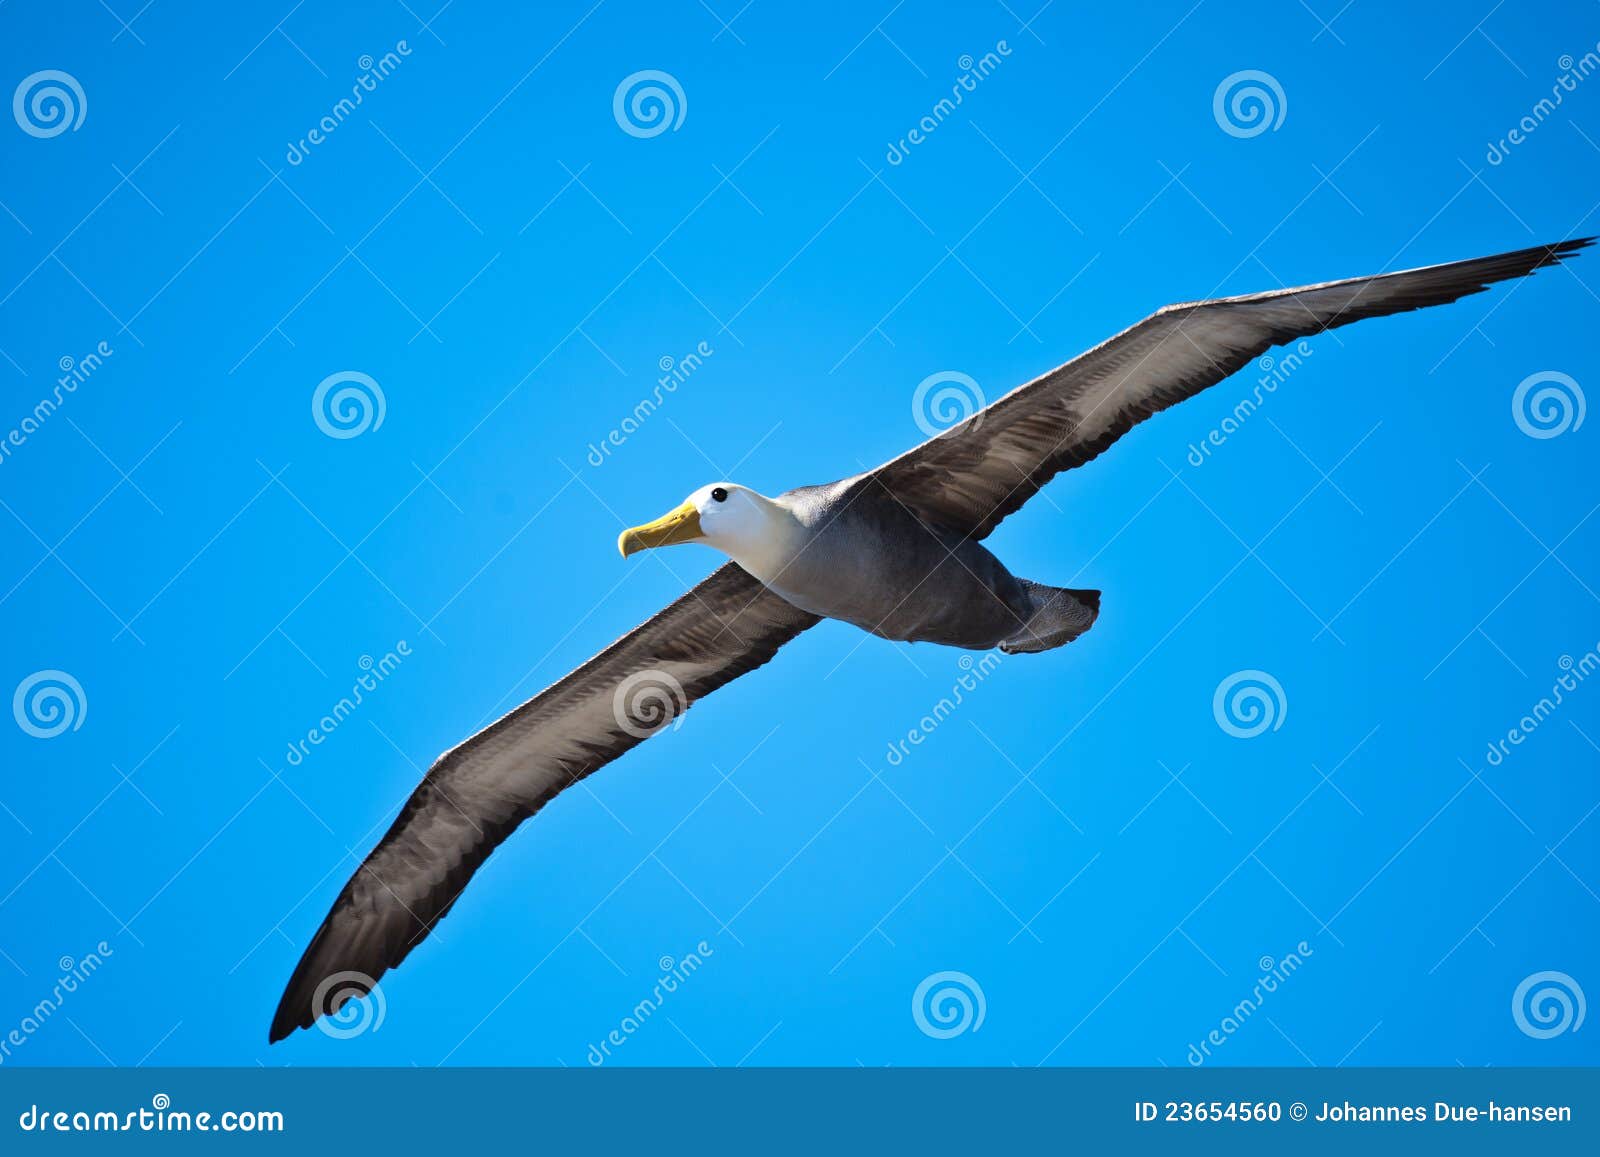 waved albatross in flight at espaÃÂ±ola, gapalagos